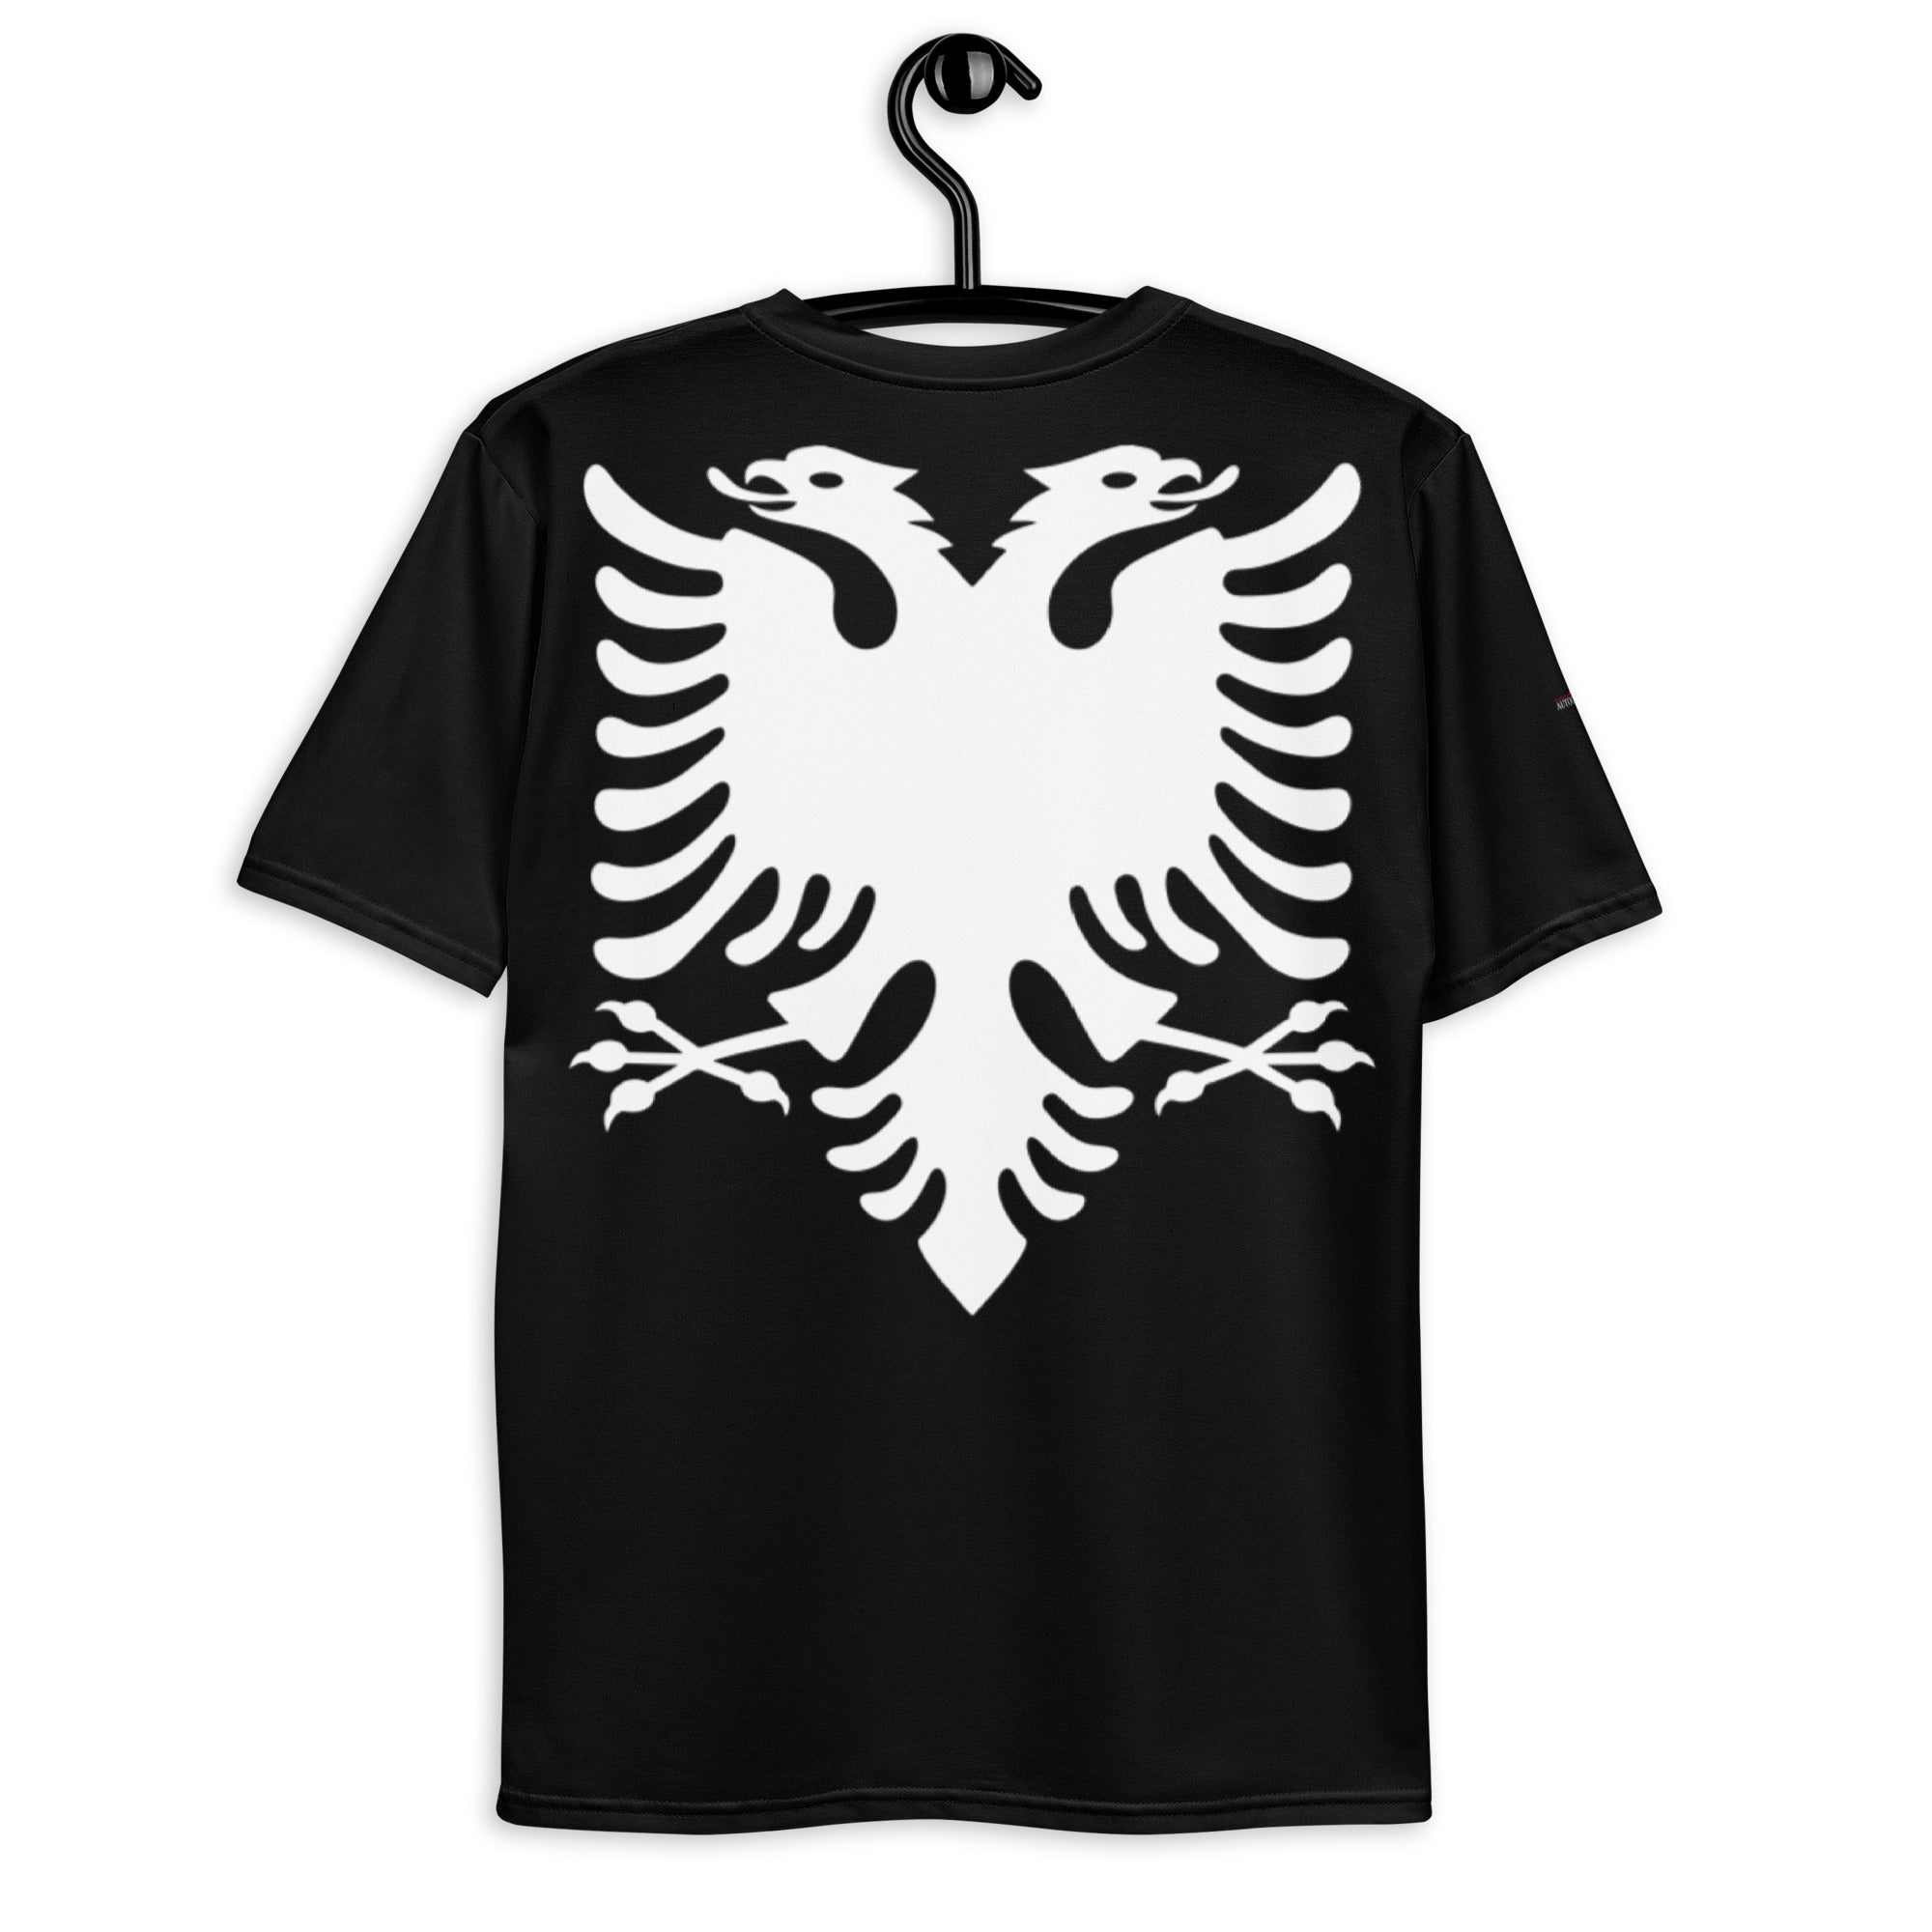 Double eagle black t-shirt